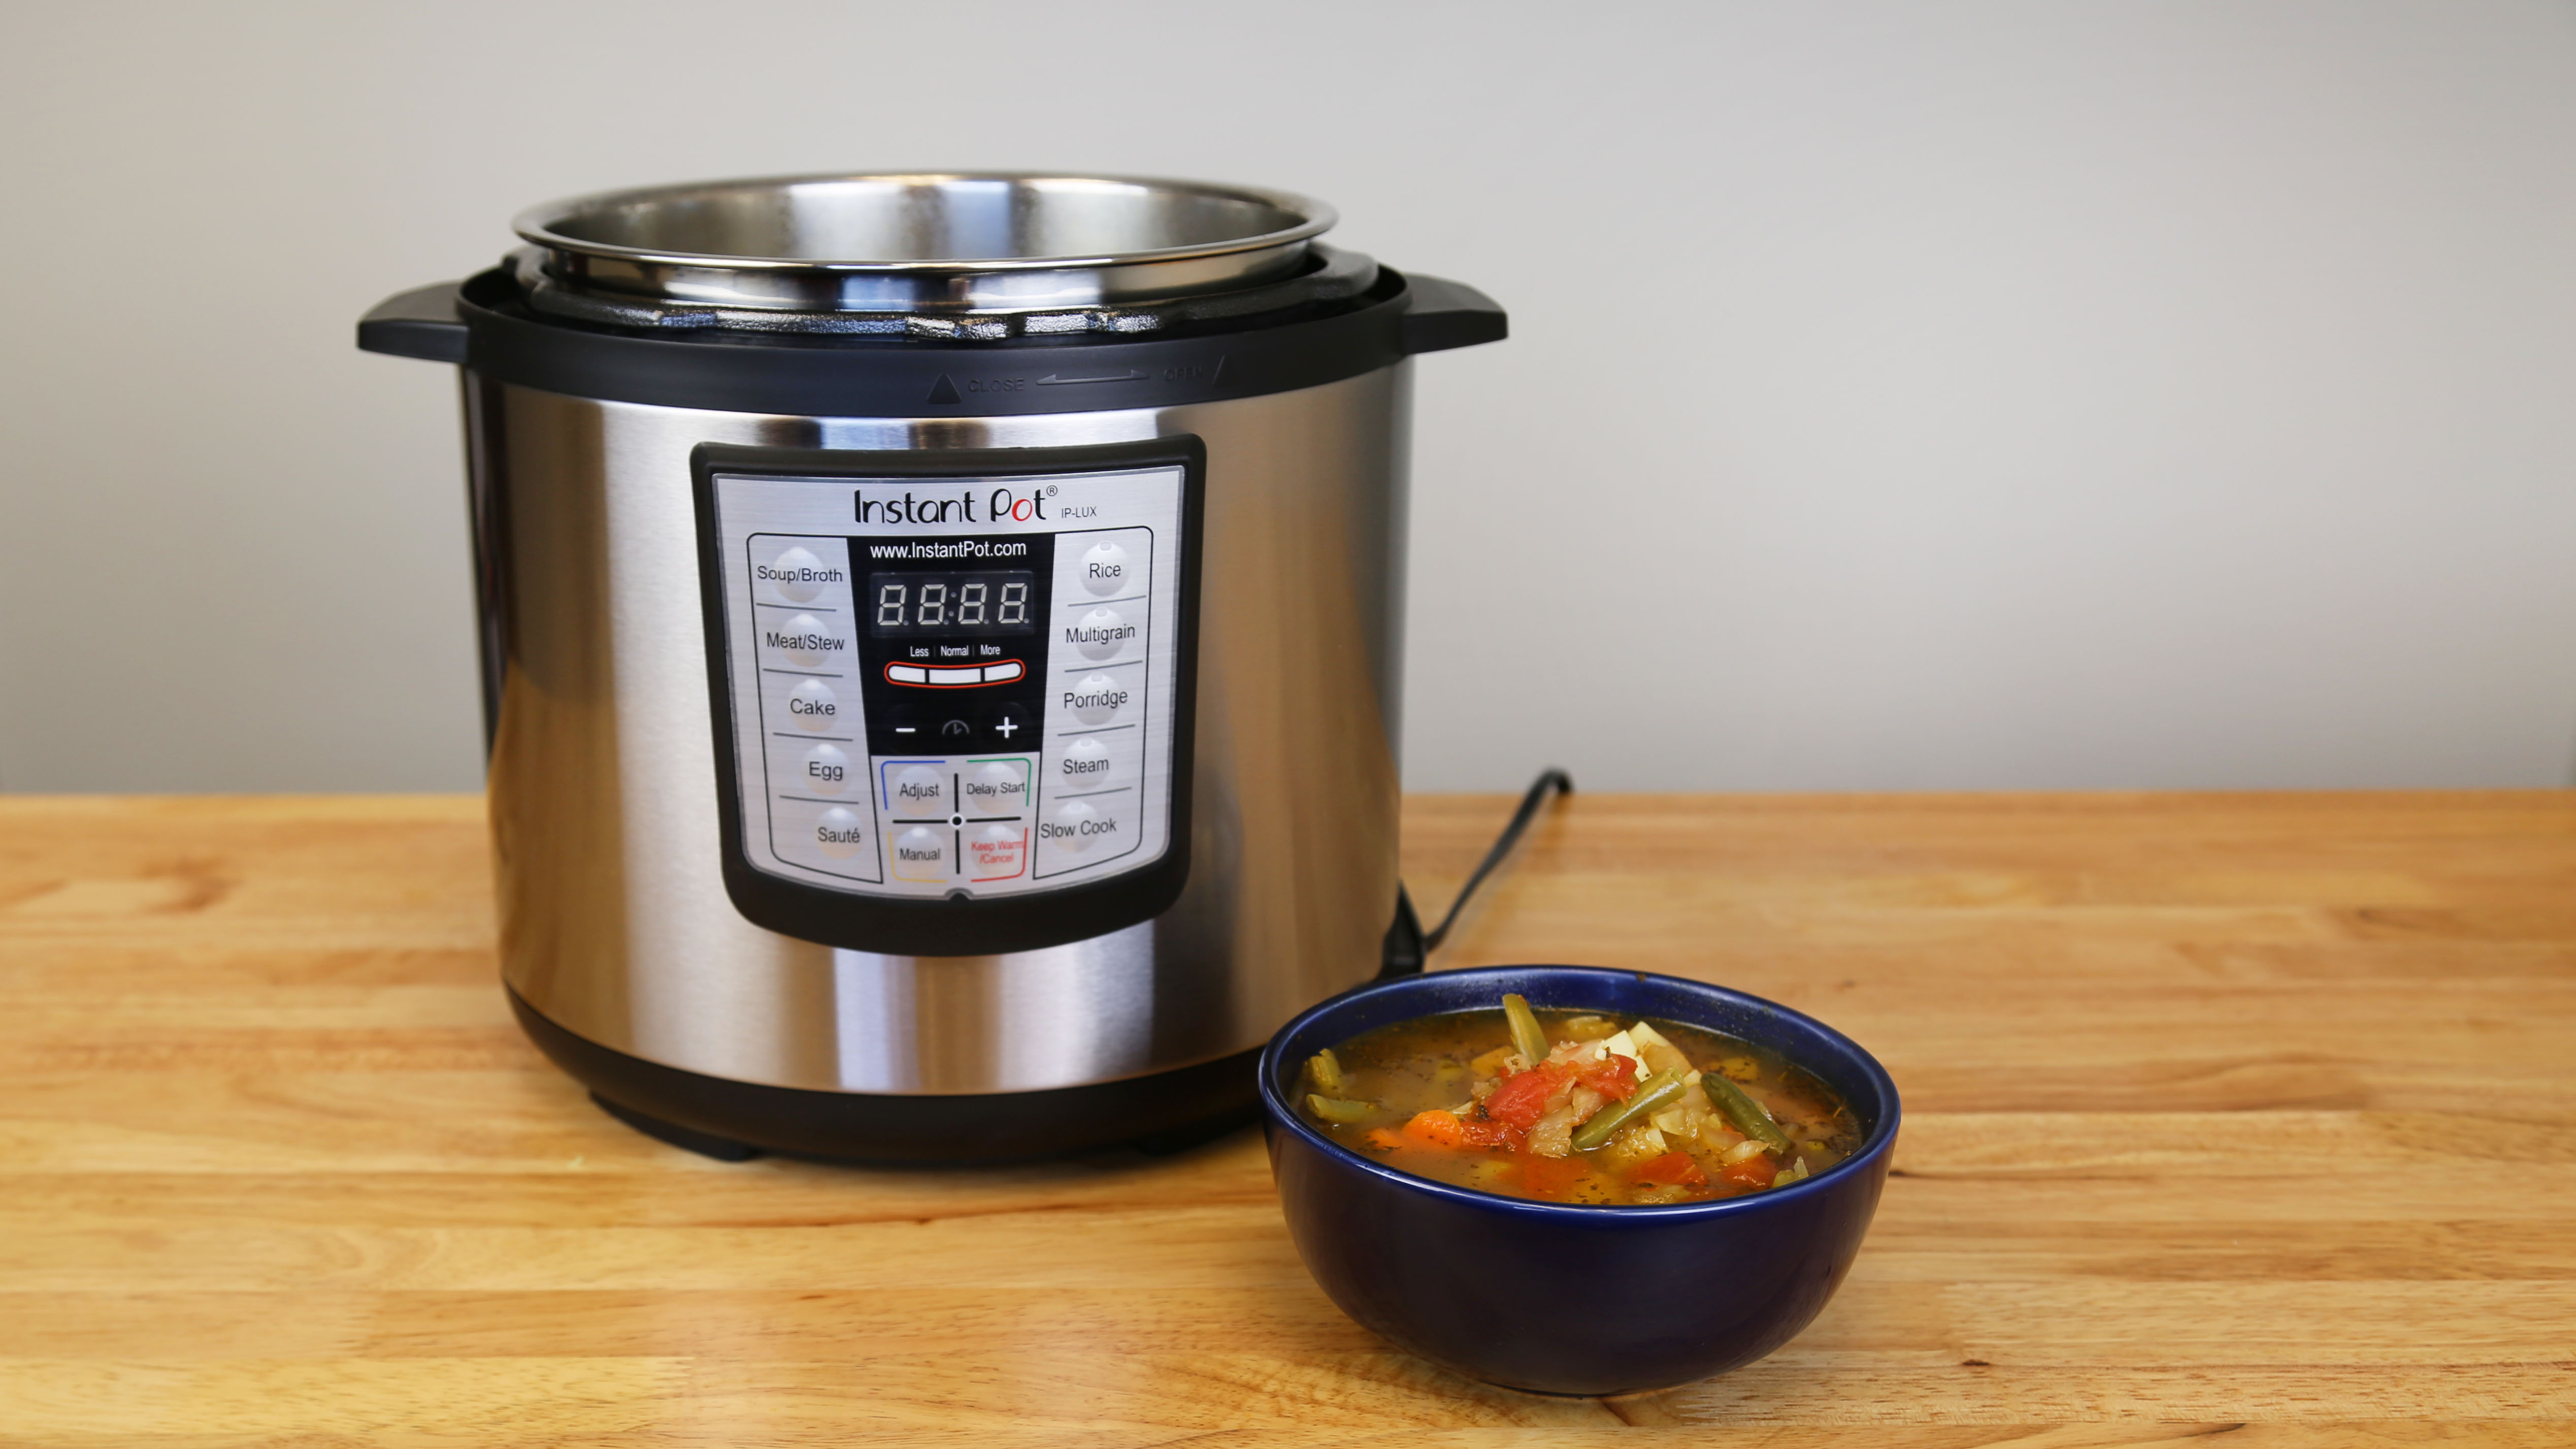 https://www.dontwasteyourmoney.com/wp-content/uploads/2019/08/multi-cooker-instant-pot-lux-soup-review-forte-ub-1.jpg